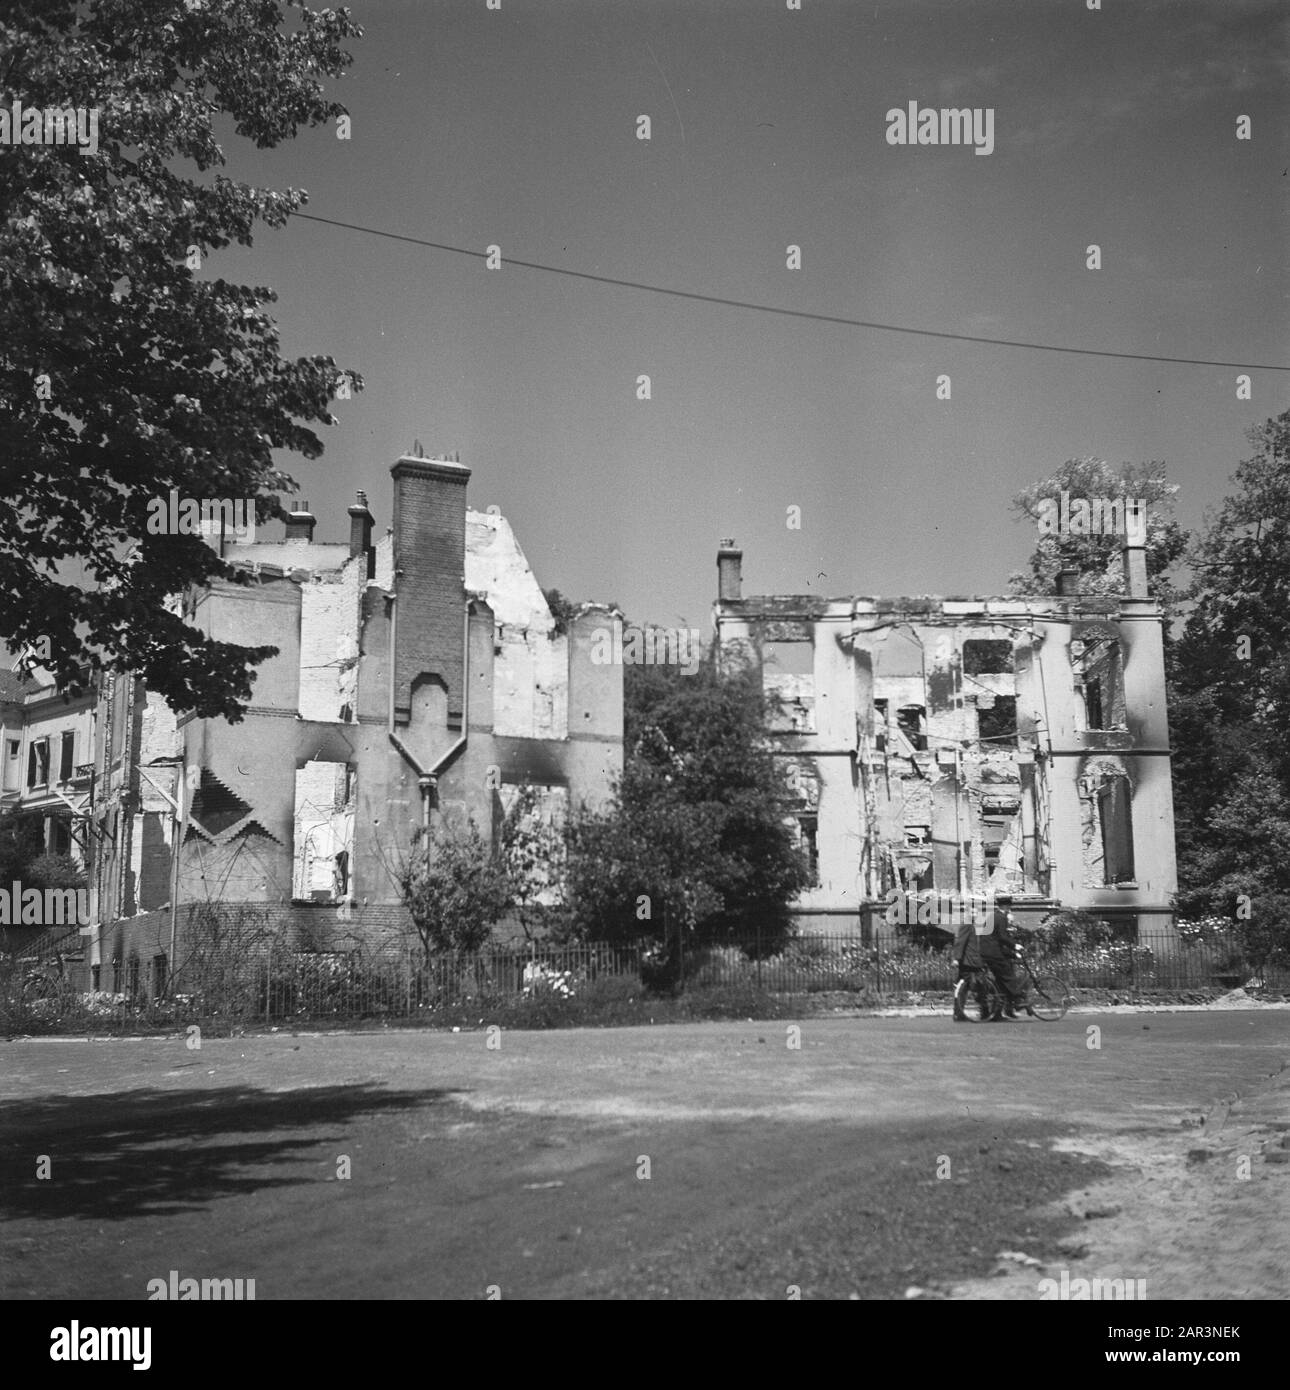 Vernielingen: Arnhem  [Destroyed villas] Date: June 1945 Location: Arnhem Keywords: buildings, World War II, destruction Stock Photo